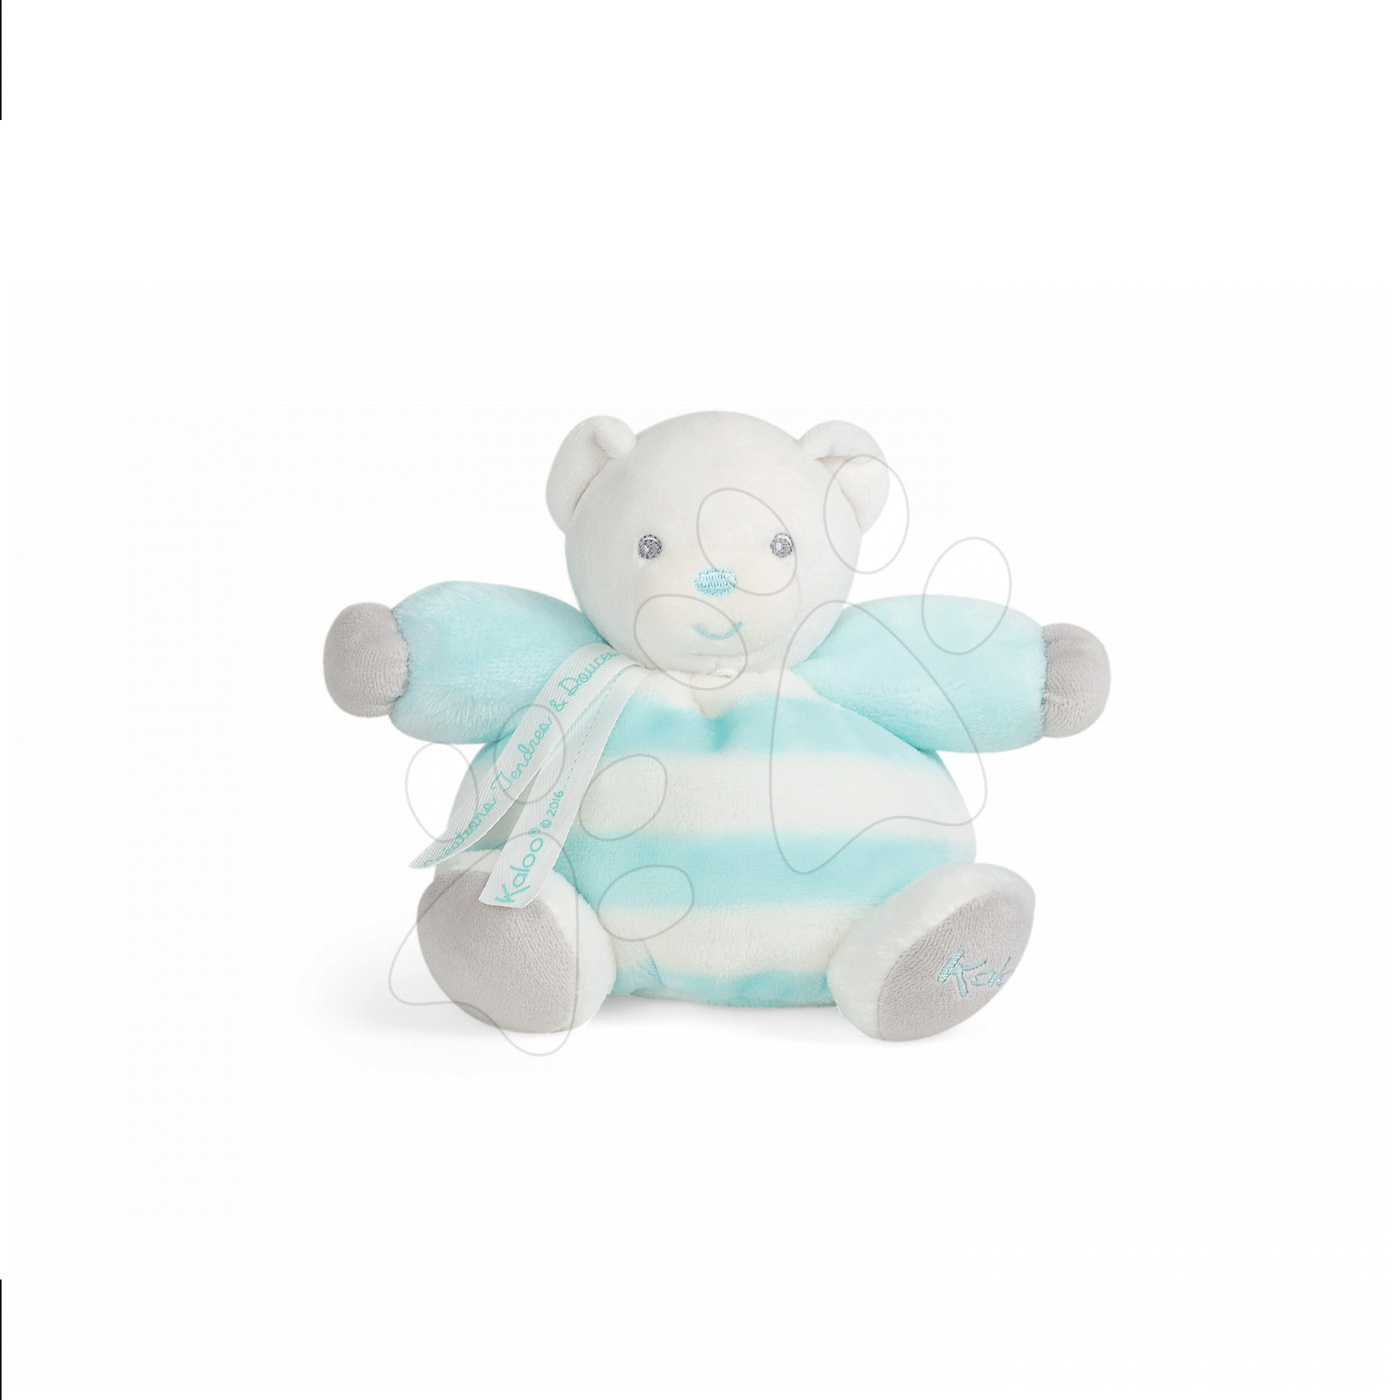 Kaloo plyšový medvedík Bebe Pastel Chubby 18 cm 960085 tyrkysovo-krémový